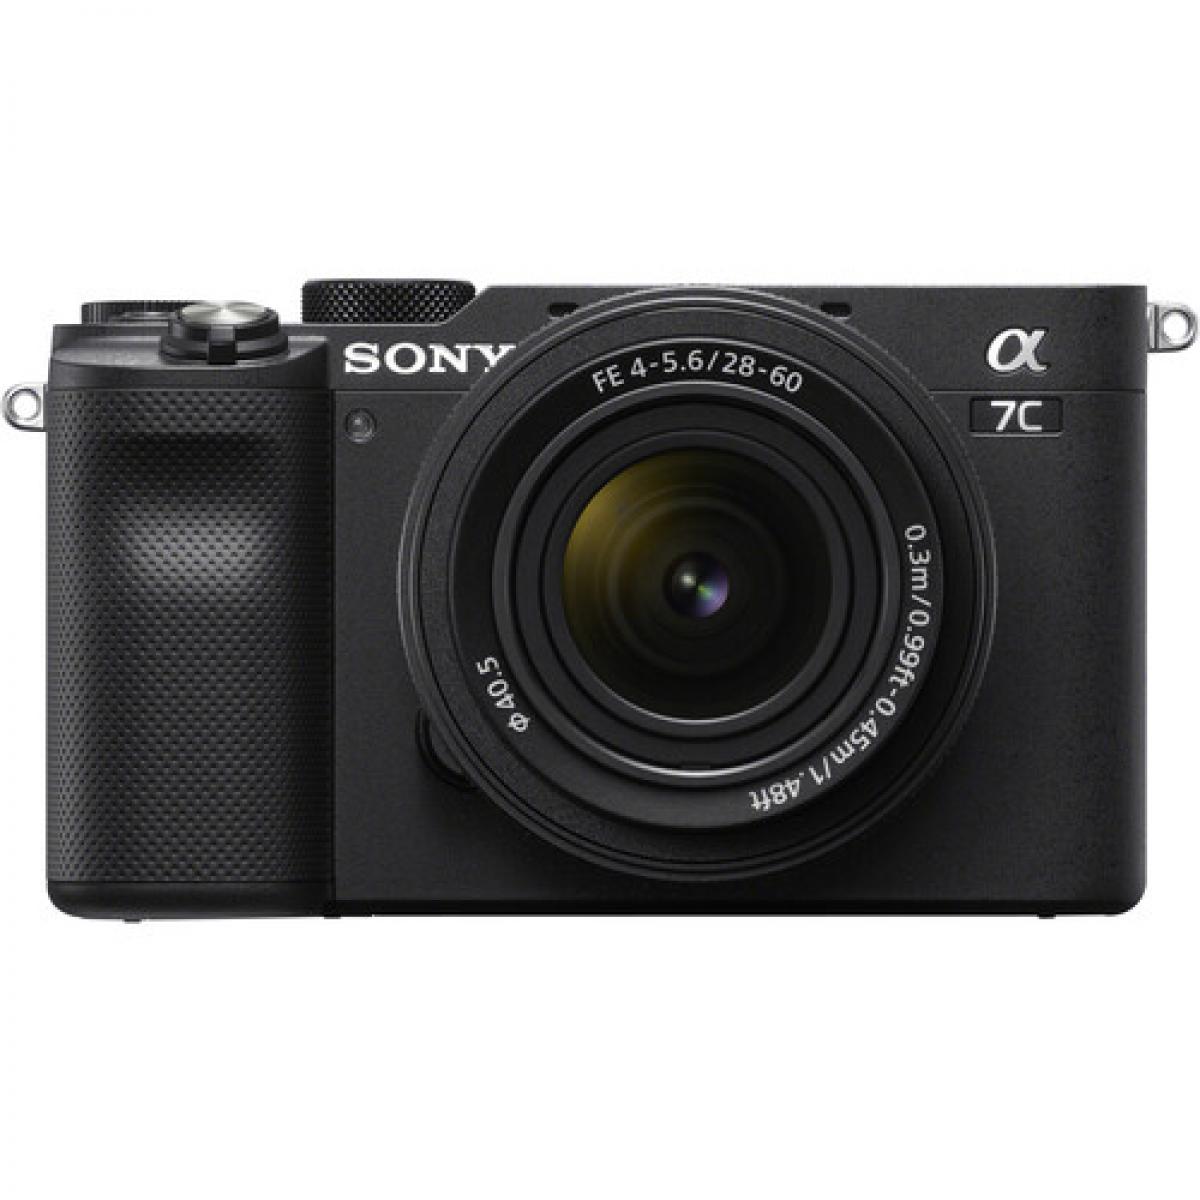 Appareil Hybride Sony Appareil photo numérique sans miroir Sony Alpha a7C avec objectif 28-60 mm (noir)